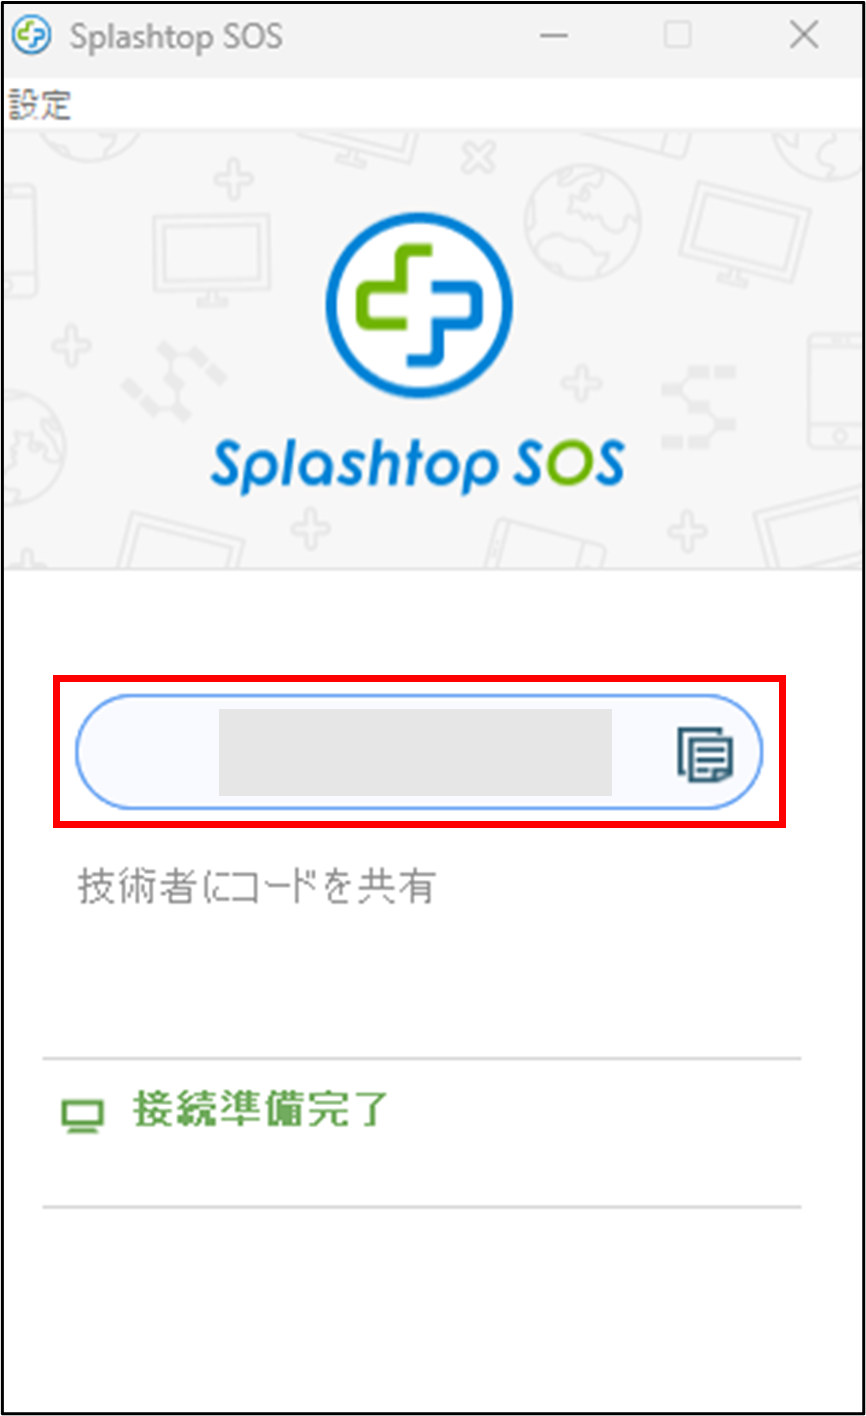 Splashtop SOSアプリの項目説明1_20221019.png